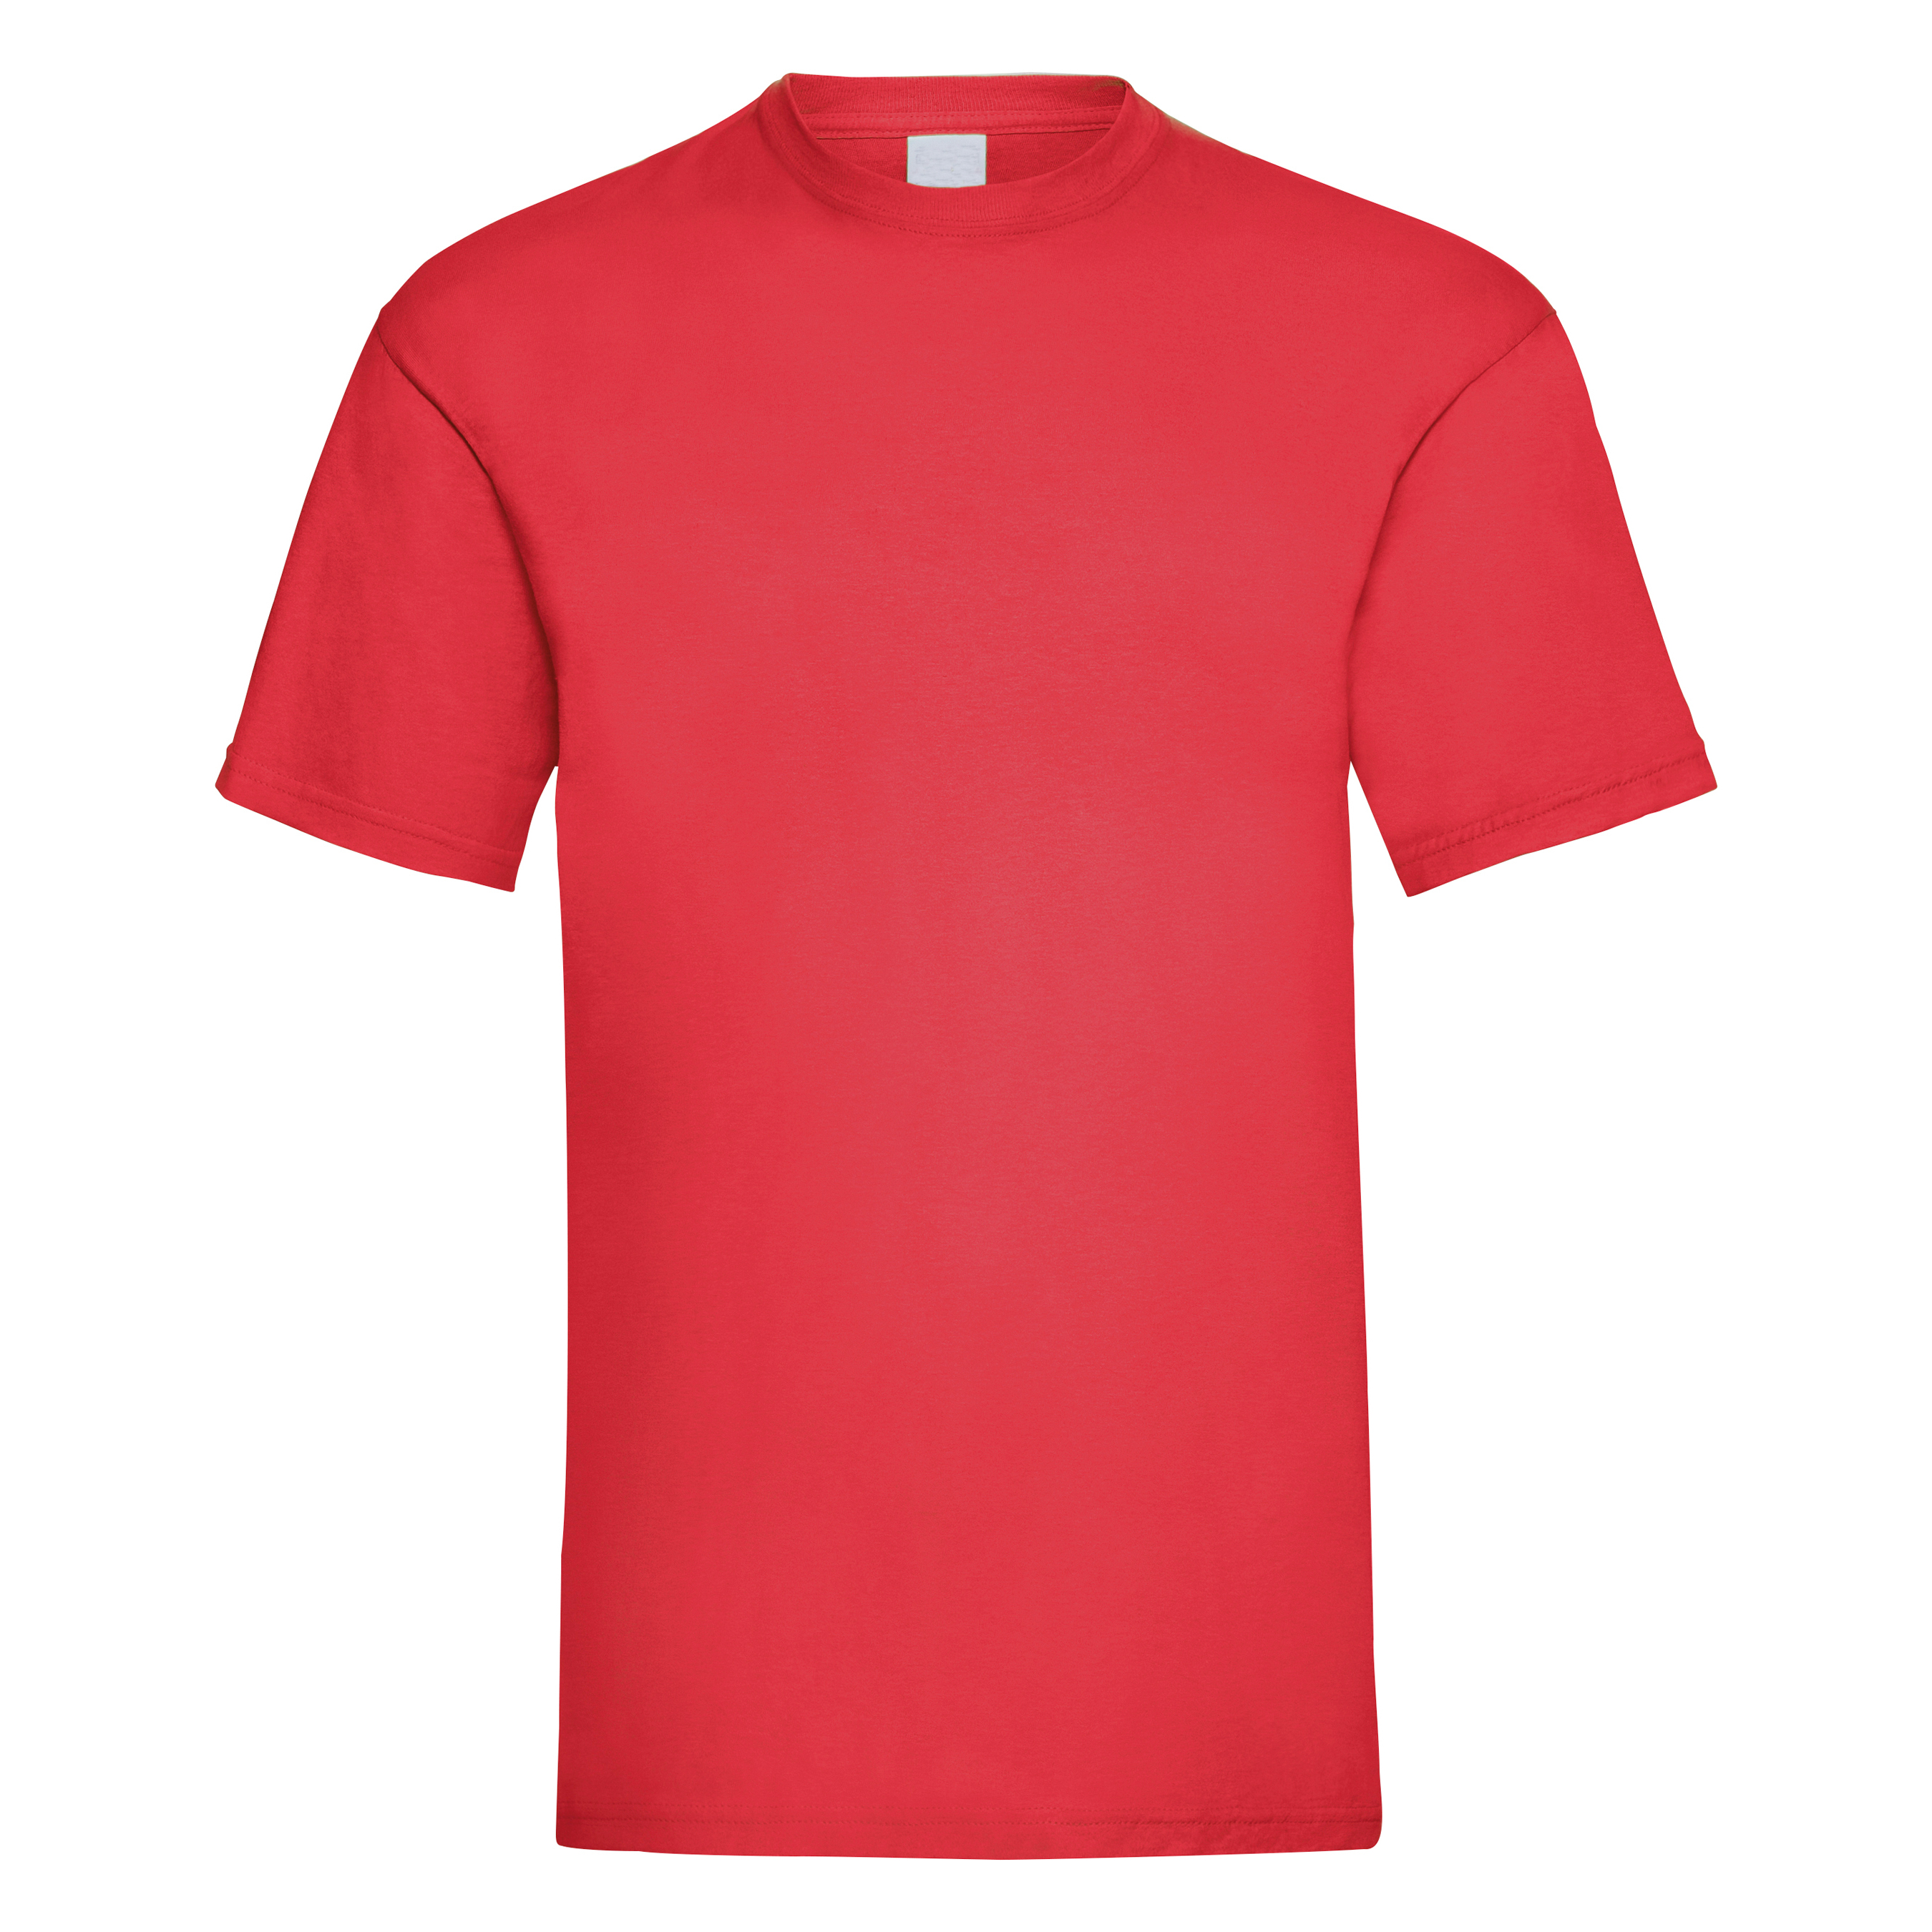 T-shirt Casual Universal Textiles - rojo - 